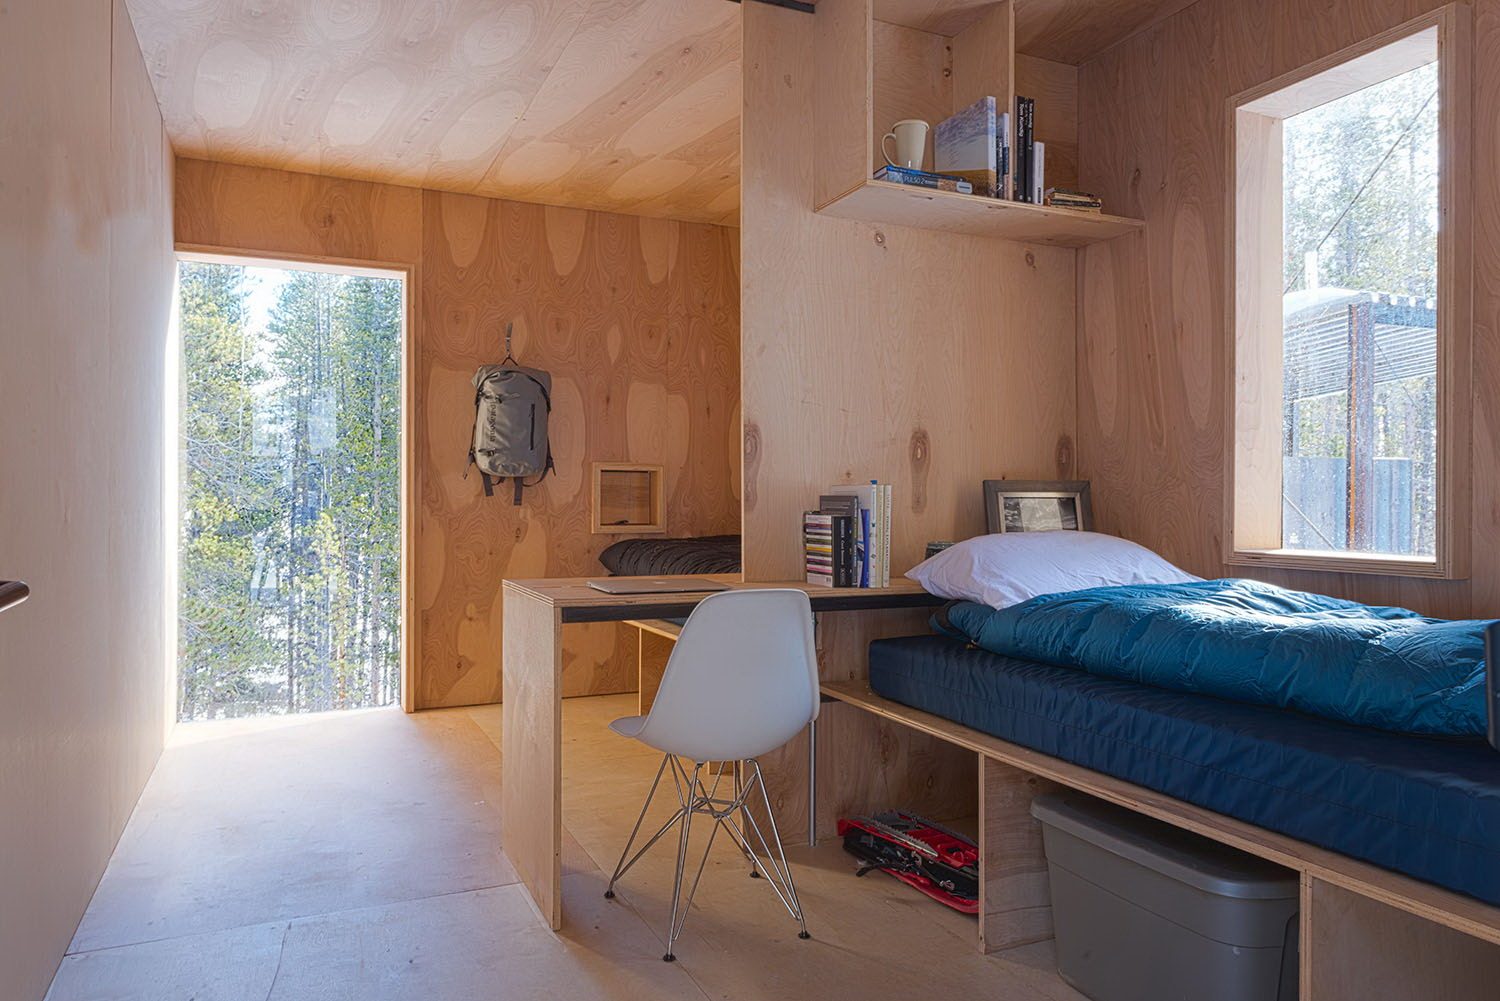 COBS Year-Round Micro Cabins by Colorado Building Workshop